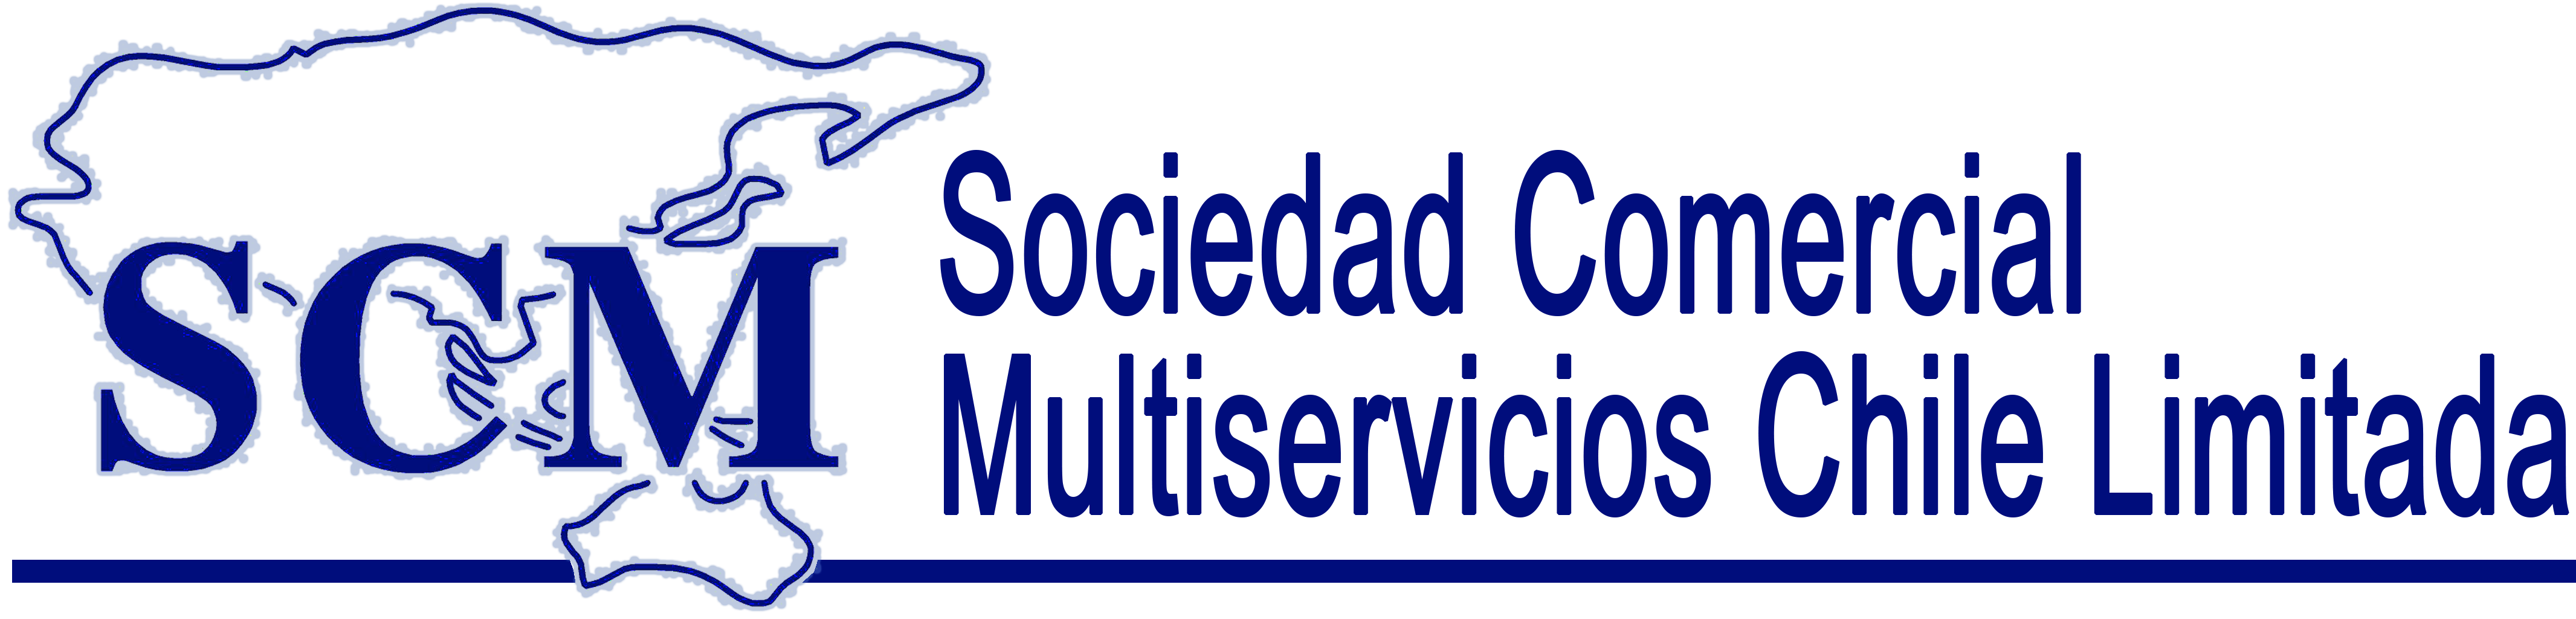 SCM Chile Limitada